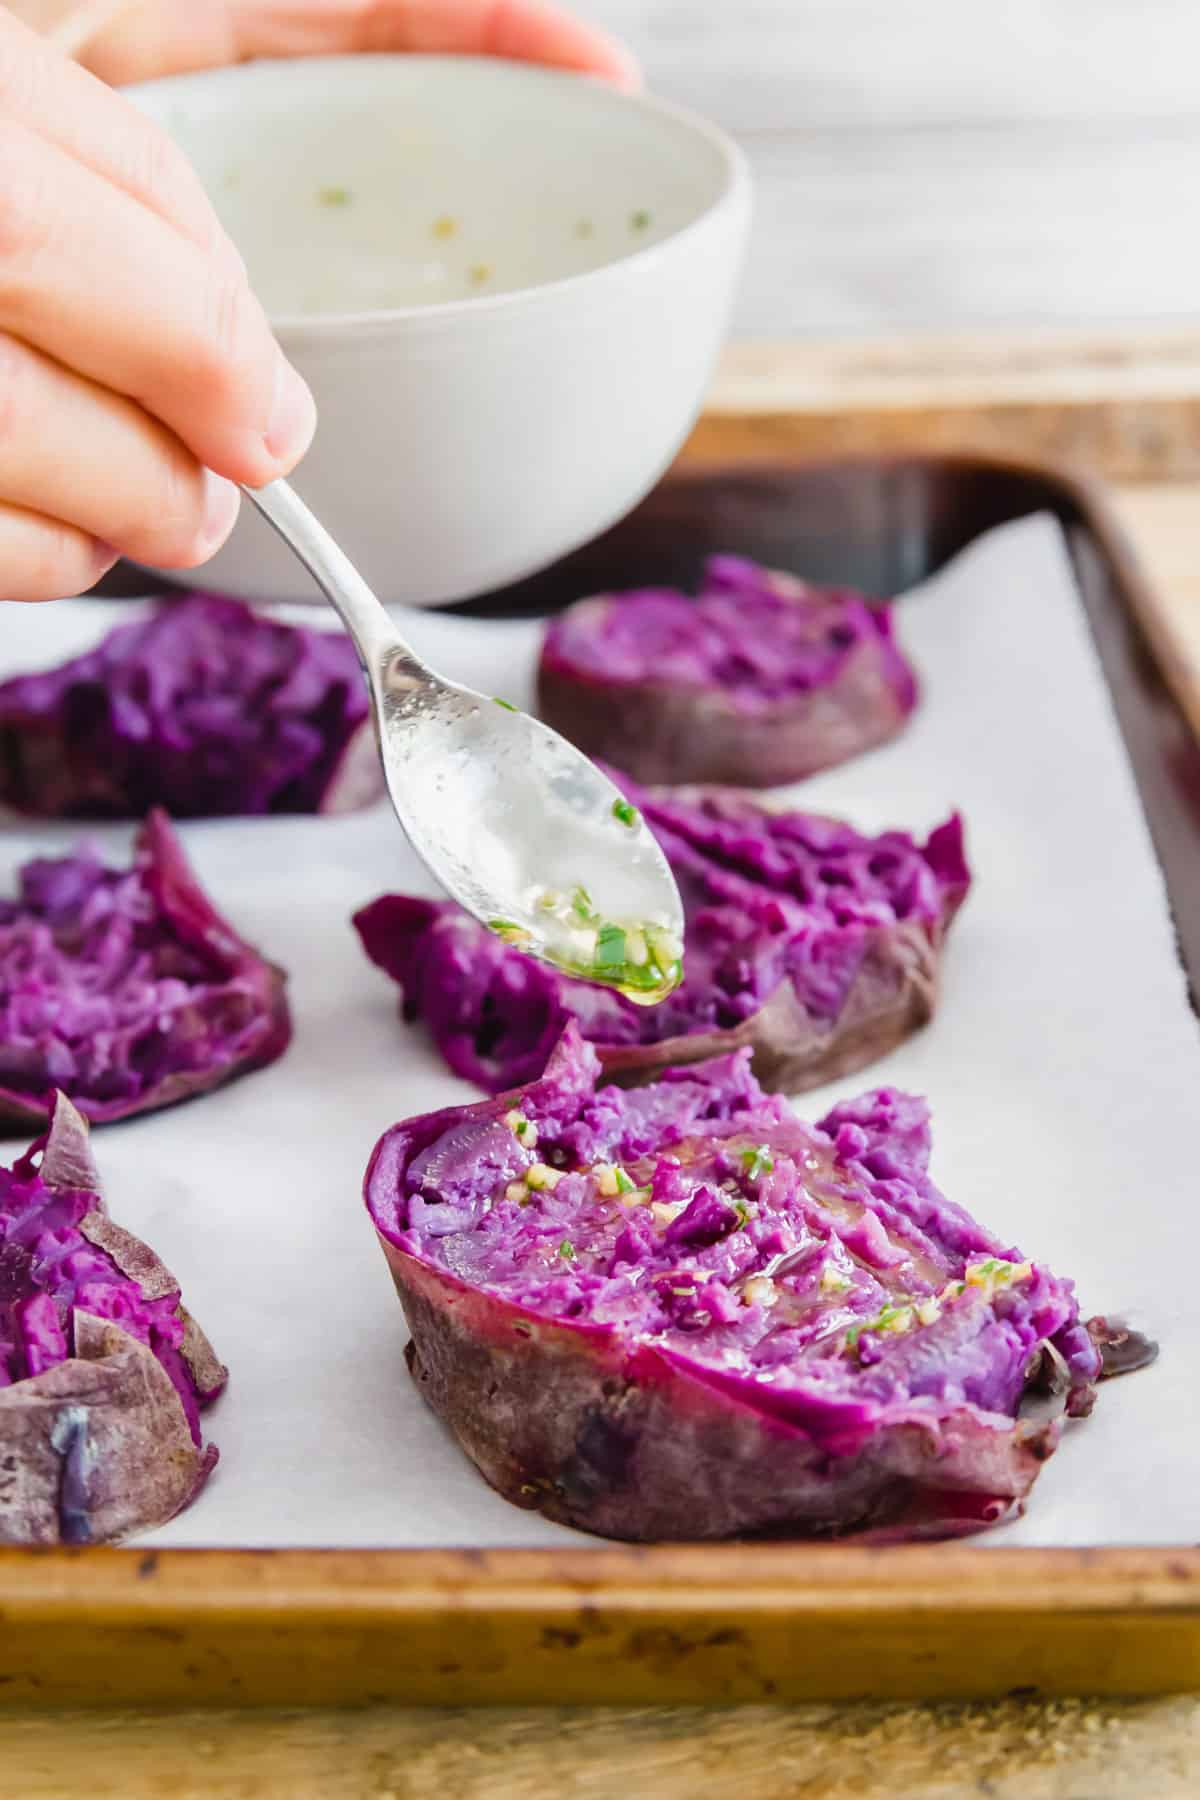 Roasted Stokes Purple Sweet Potato Recipe - Smashed Purple Potatoes